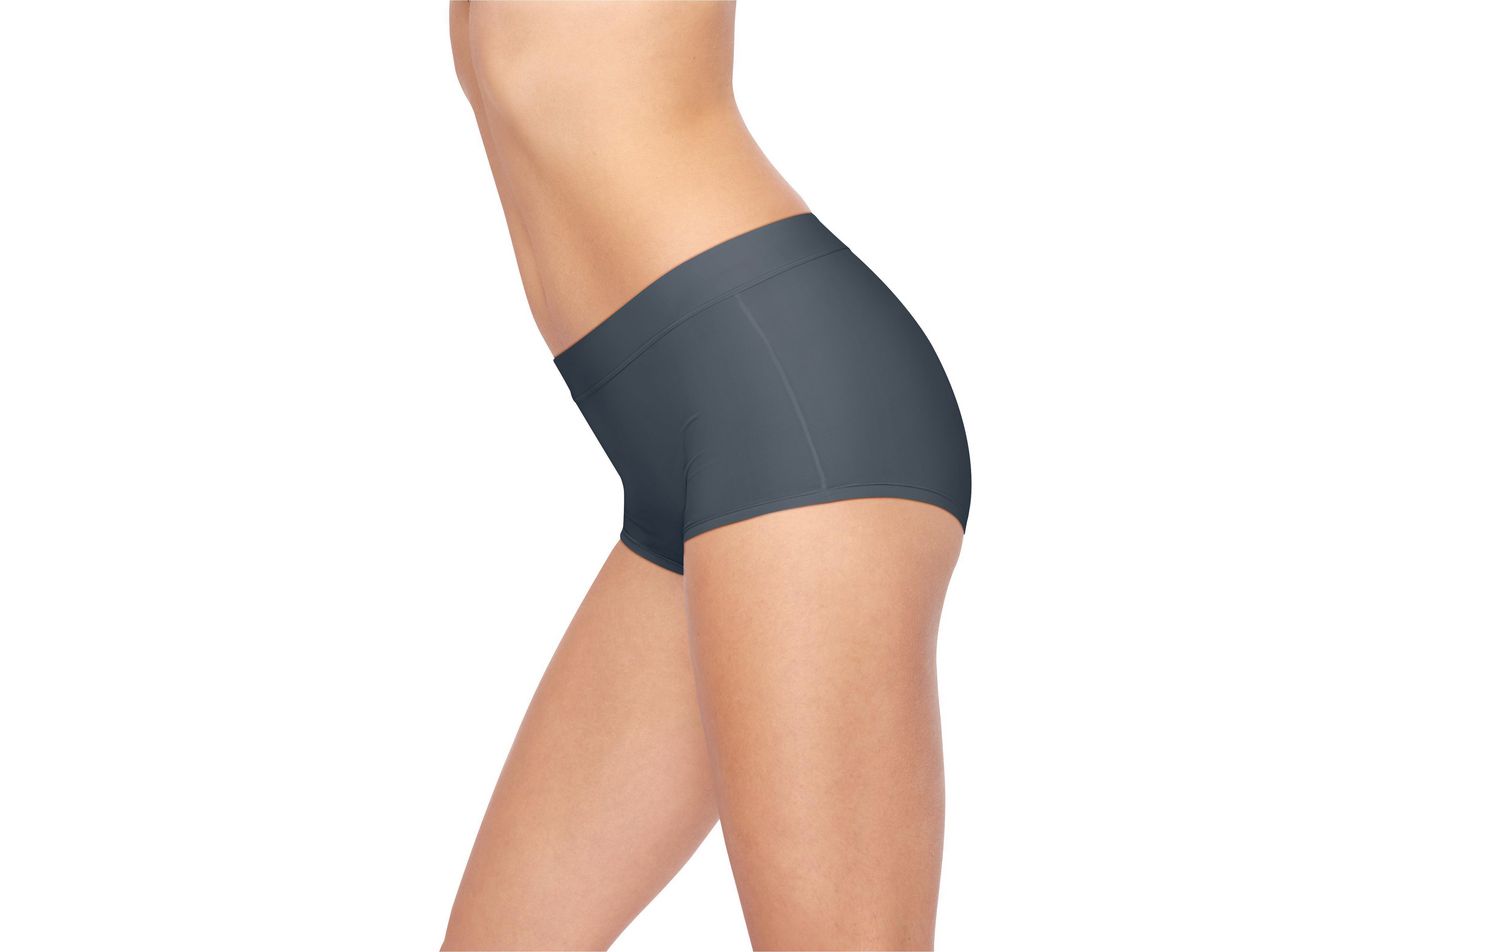 Hanes Women's Boyshorts Underwear 12-Pack Only $6.98 on